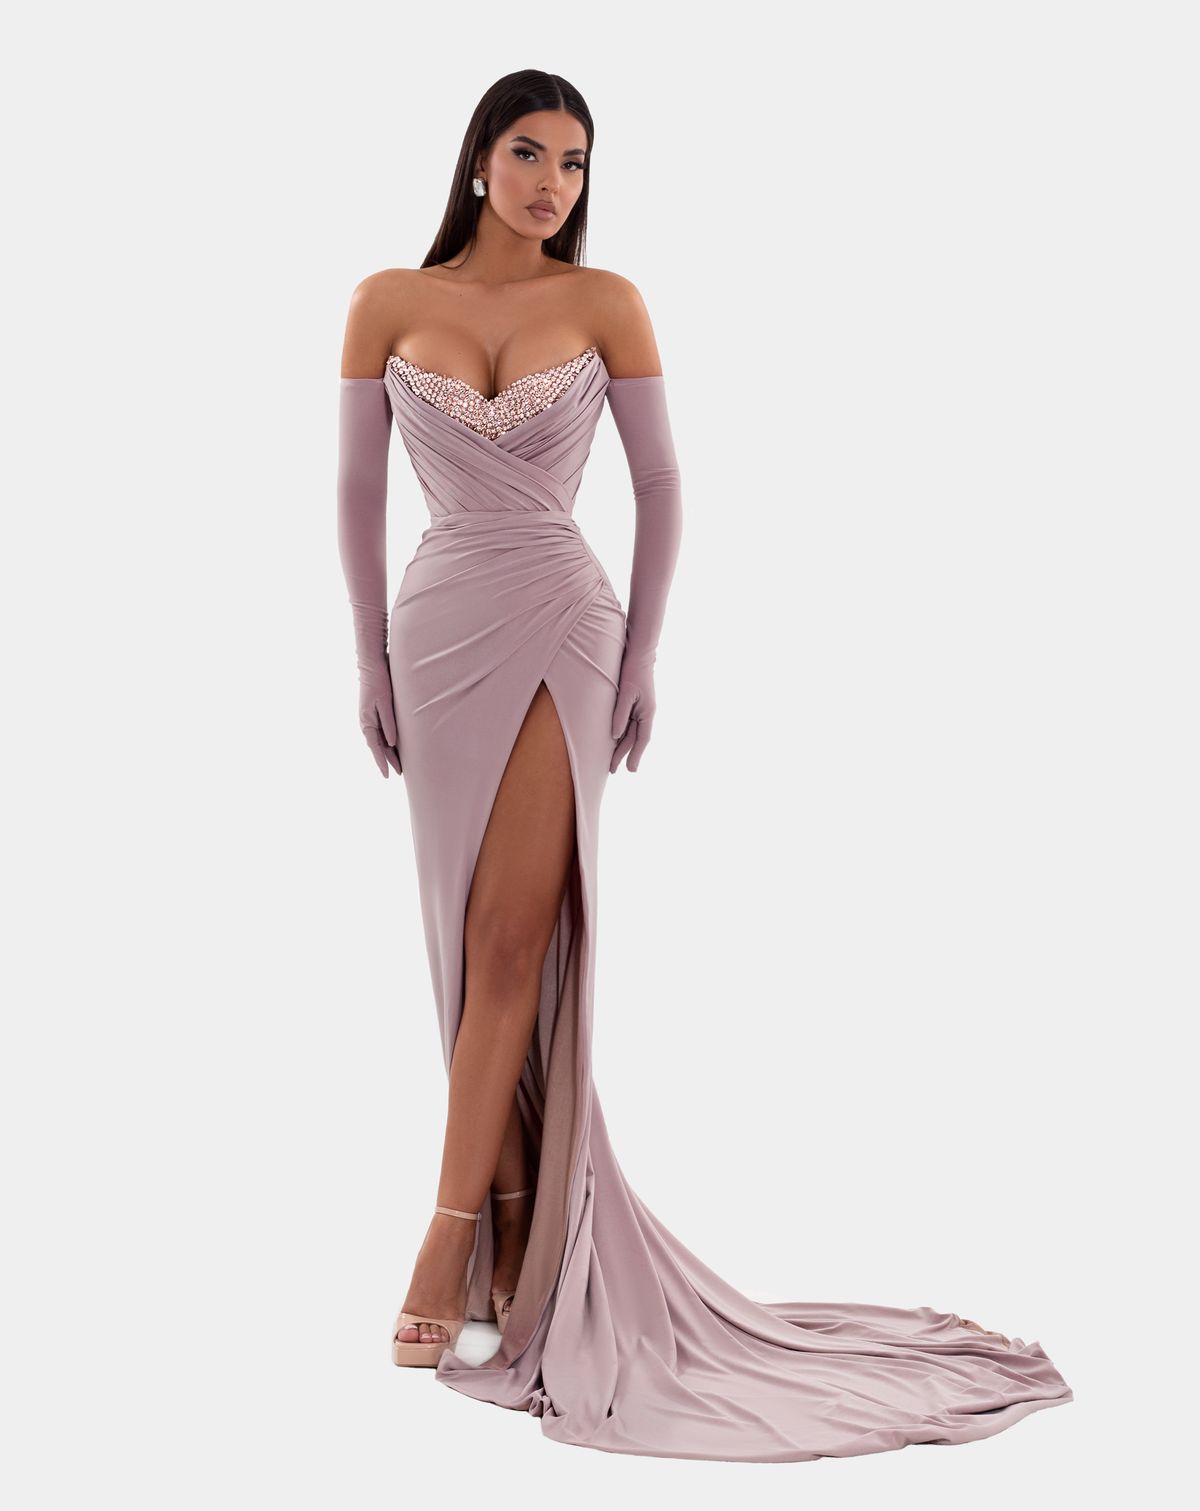 Mermaid Corset Wedding Dress – ALBINA DYLA